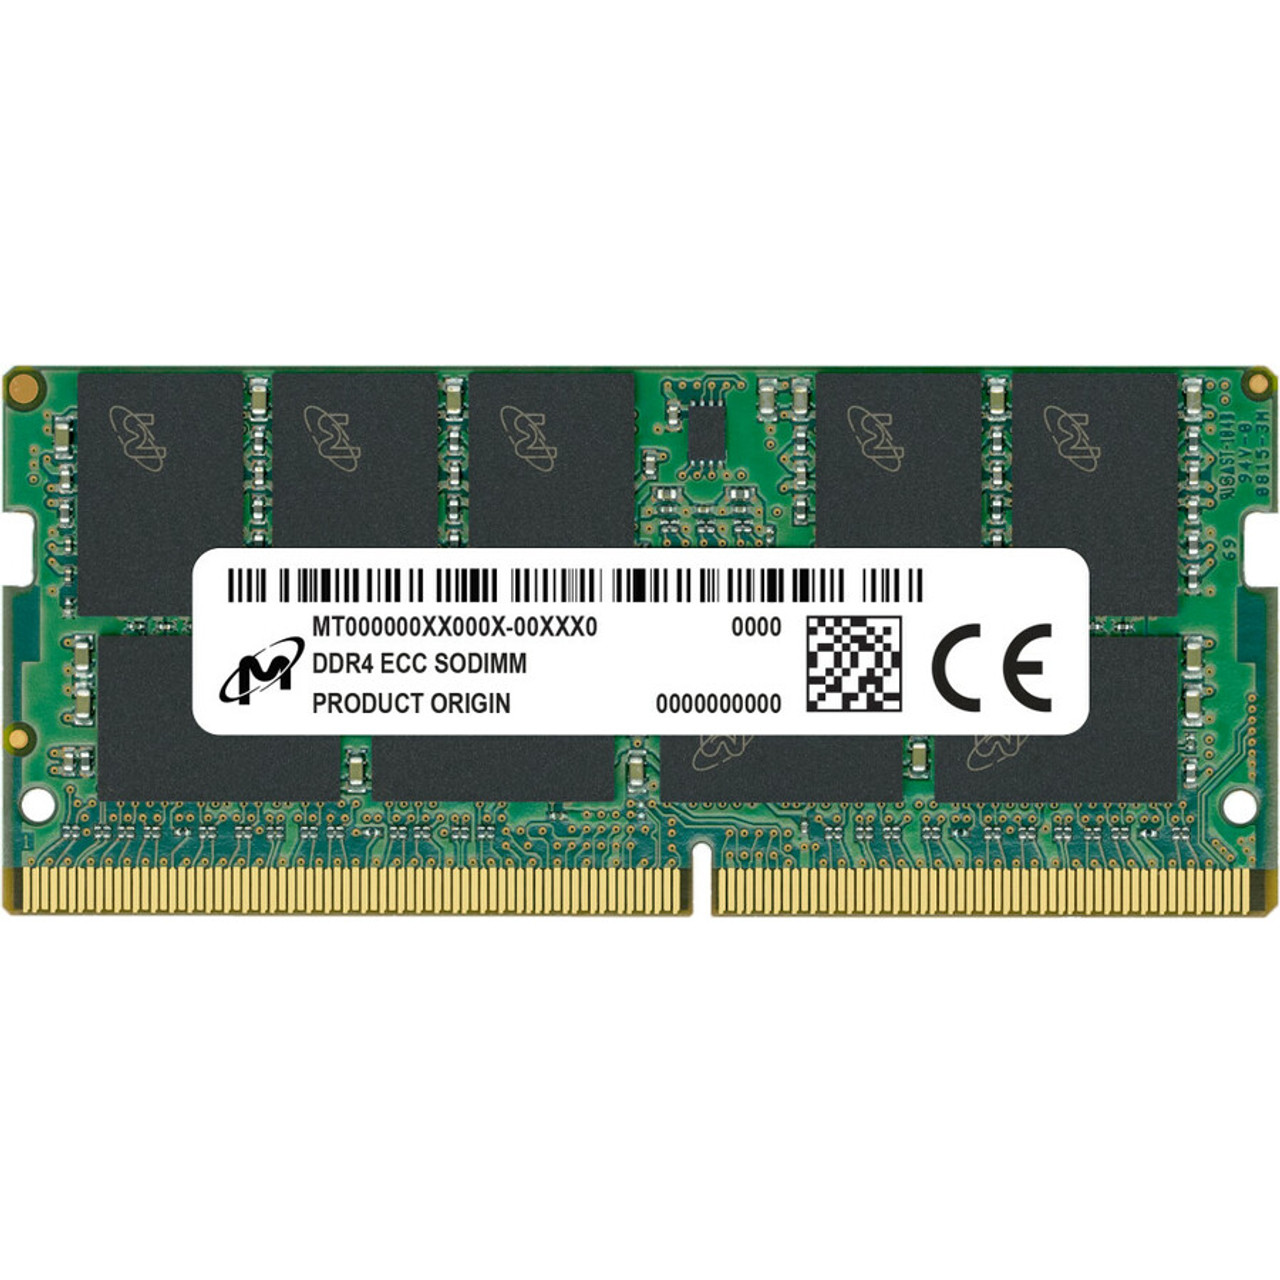 Buy the Crucial 16GB DDR4 Laptop RAM SODIMM - 3200 MT/s (PC4-25600